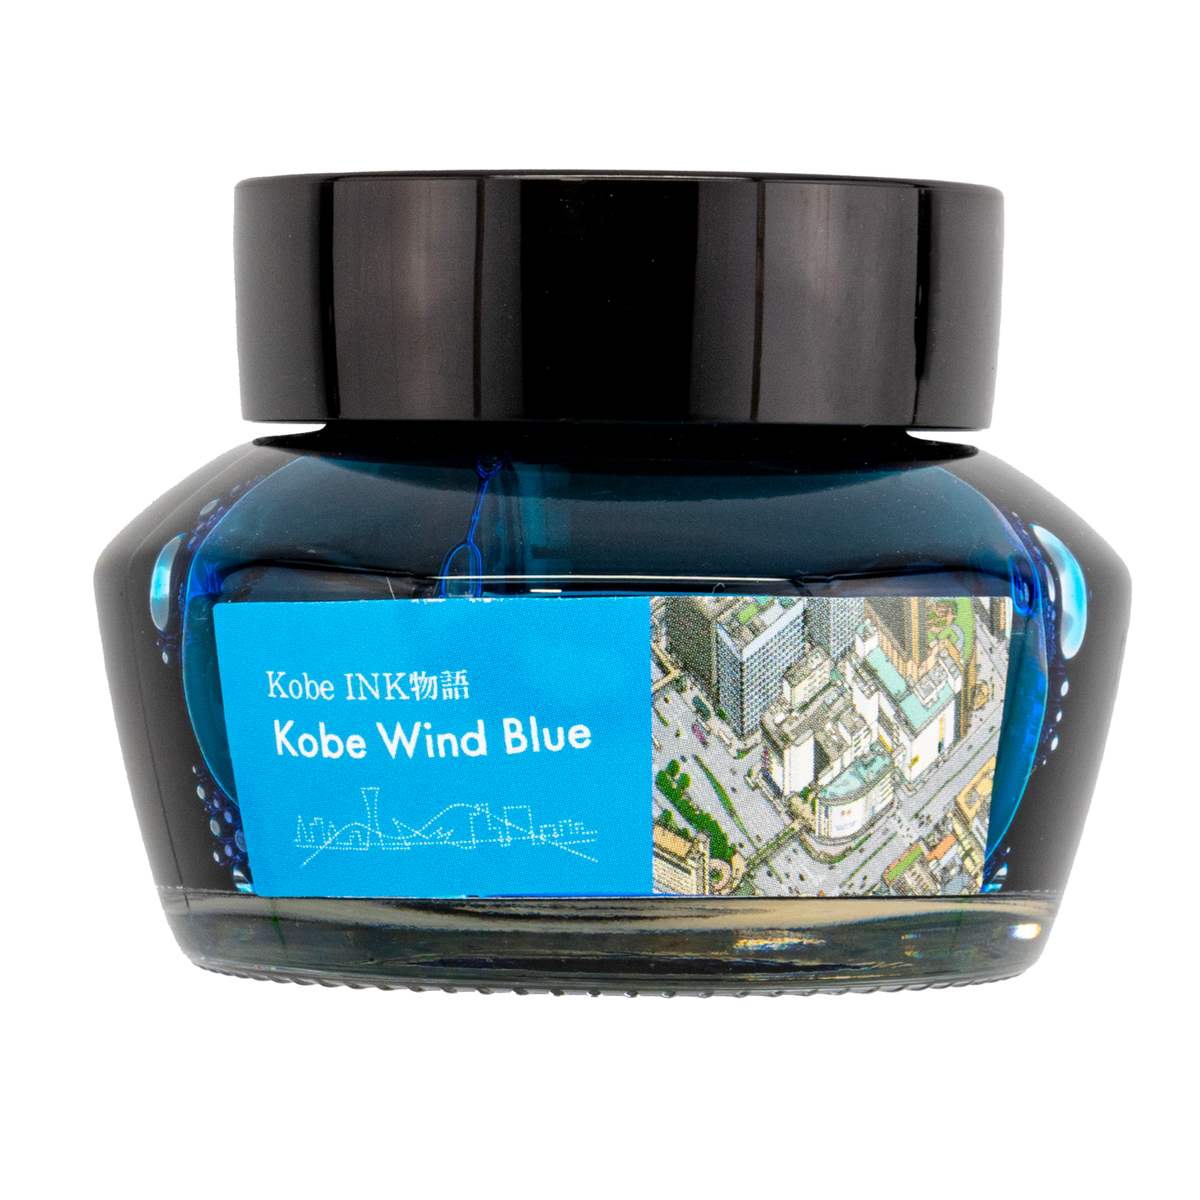 Kobe Wind Blue Ink